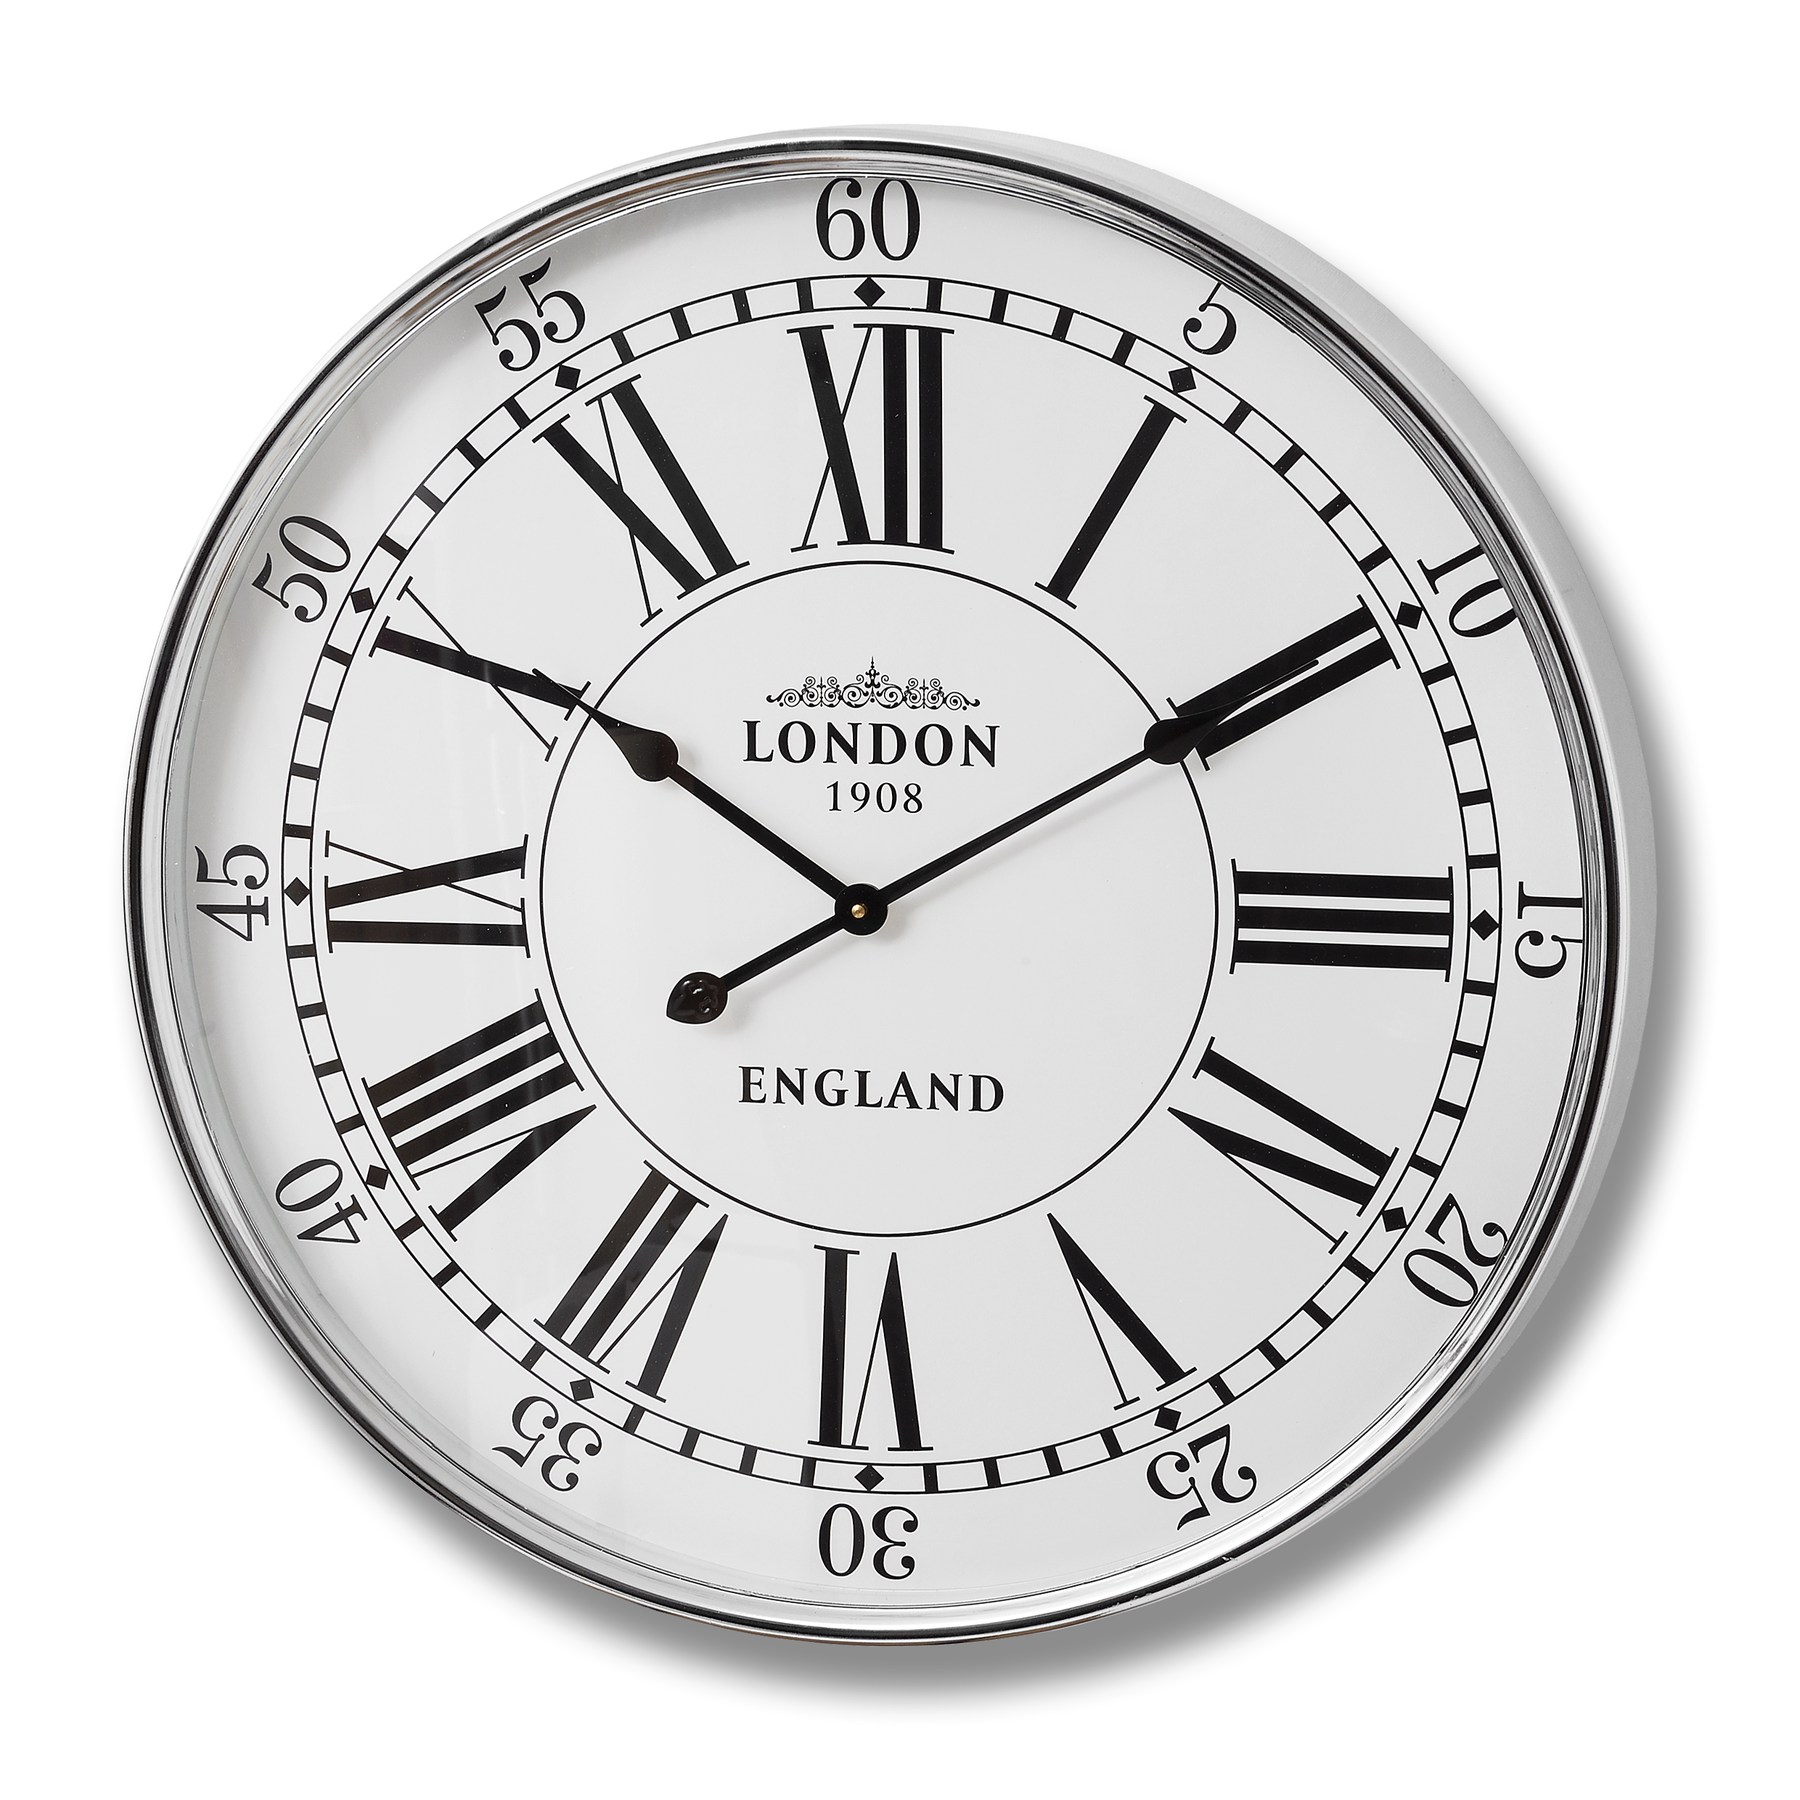 London City Wall Clock - Image 1